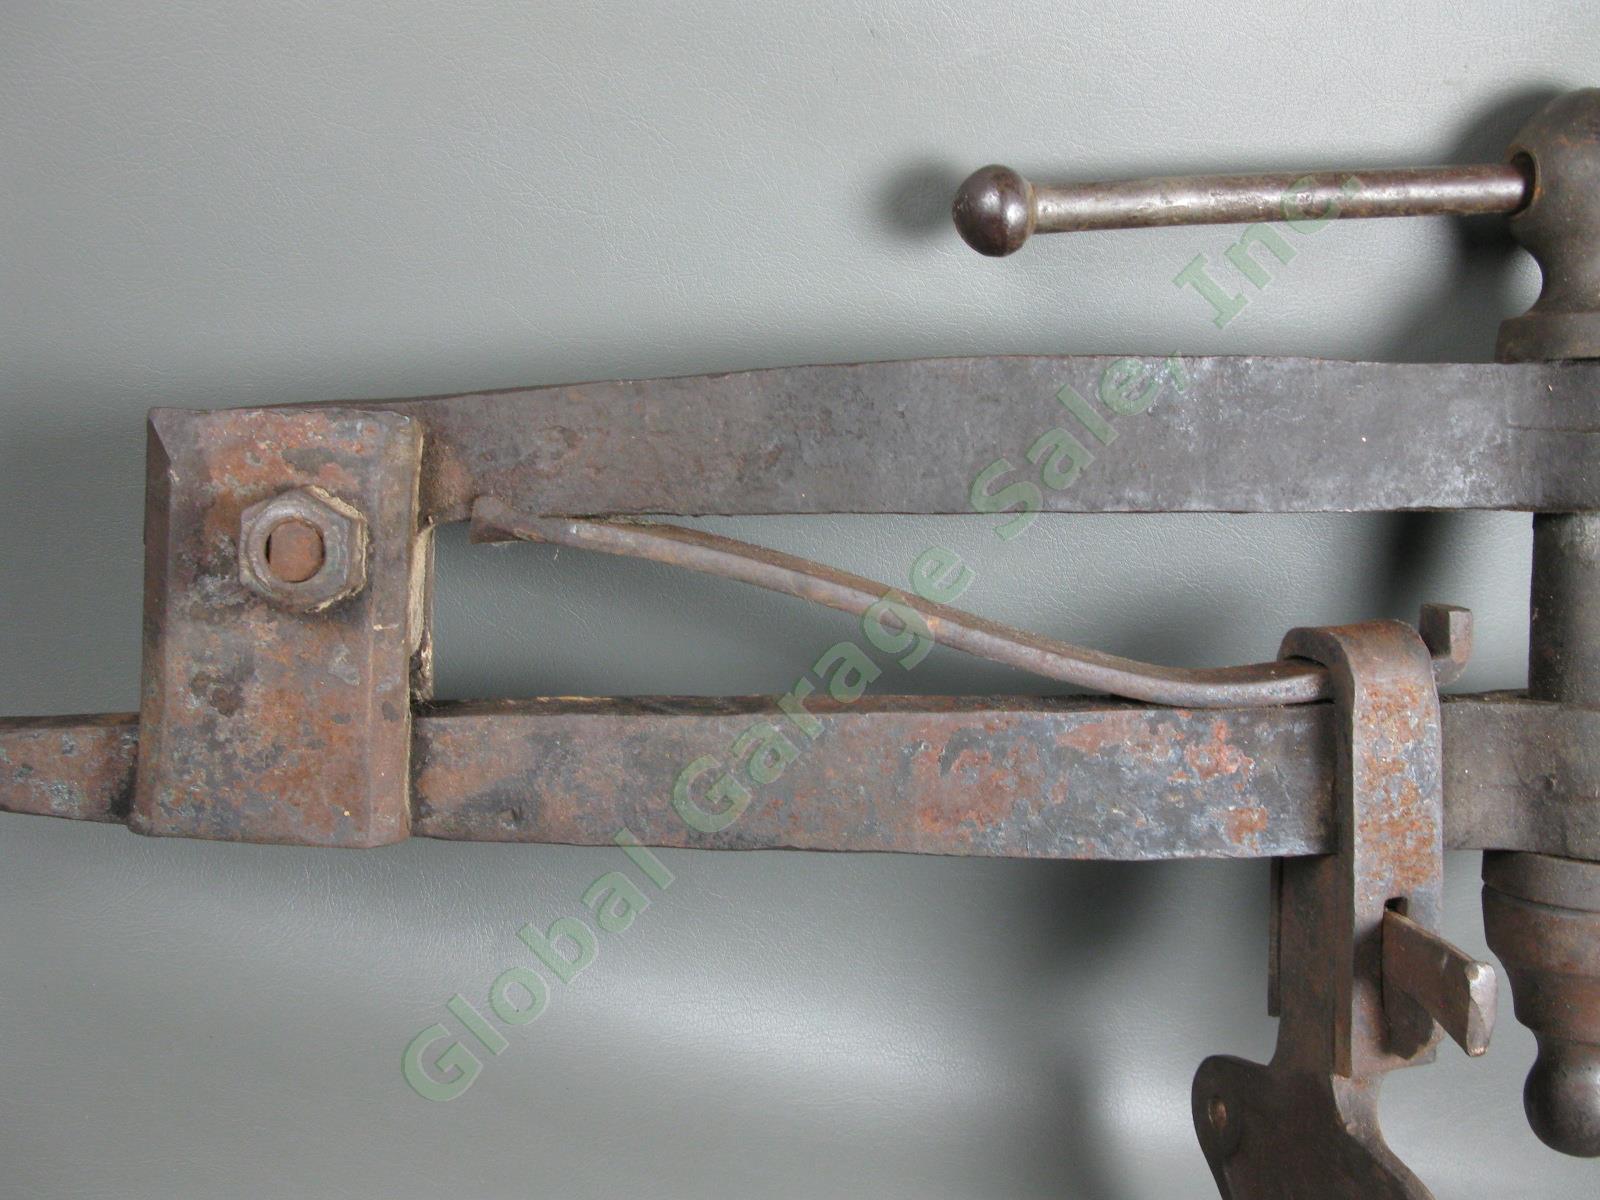 VTG Antique Blacksmith #2 Post Leg Vise 4 1/2" Jaw Clamp 53 lb Anvil Tool Forge 2